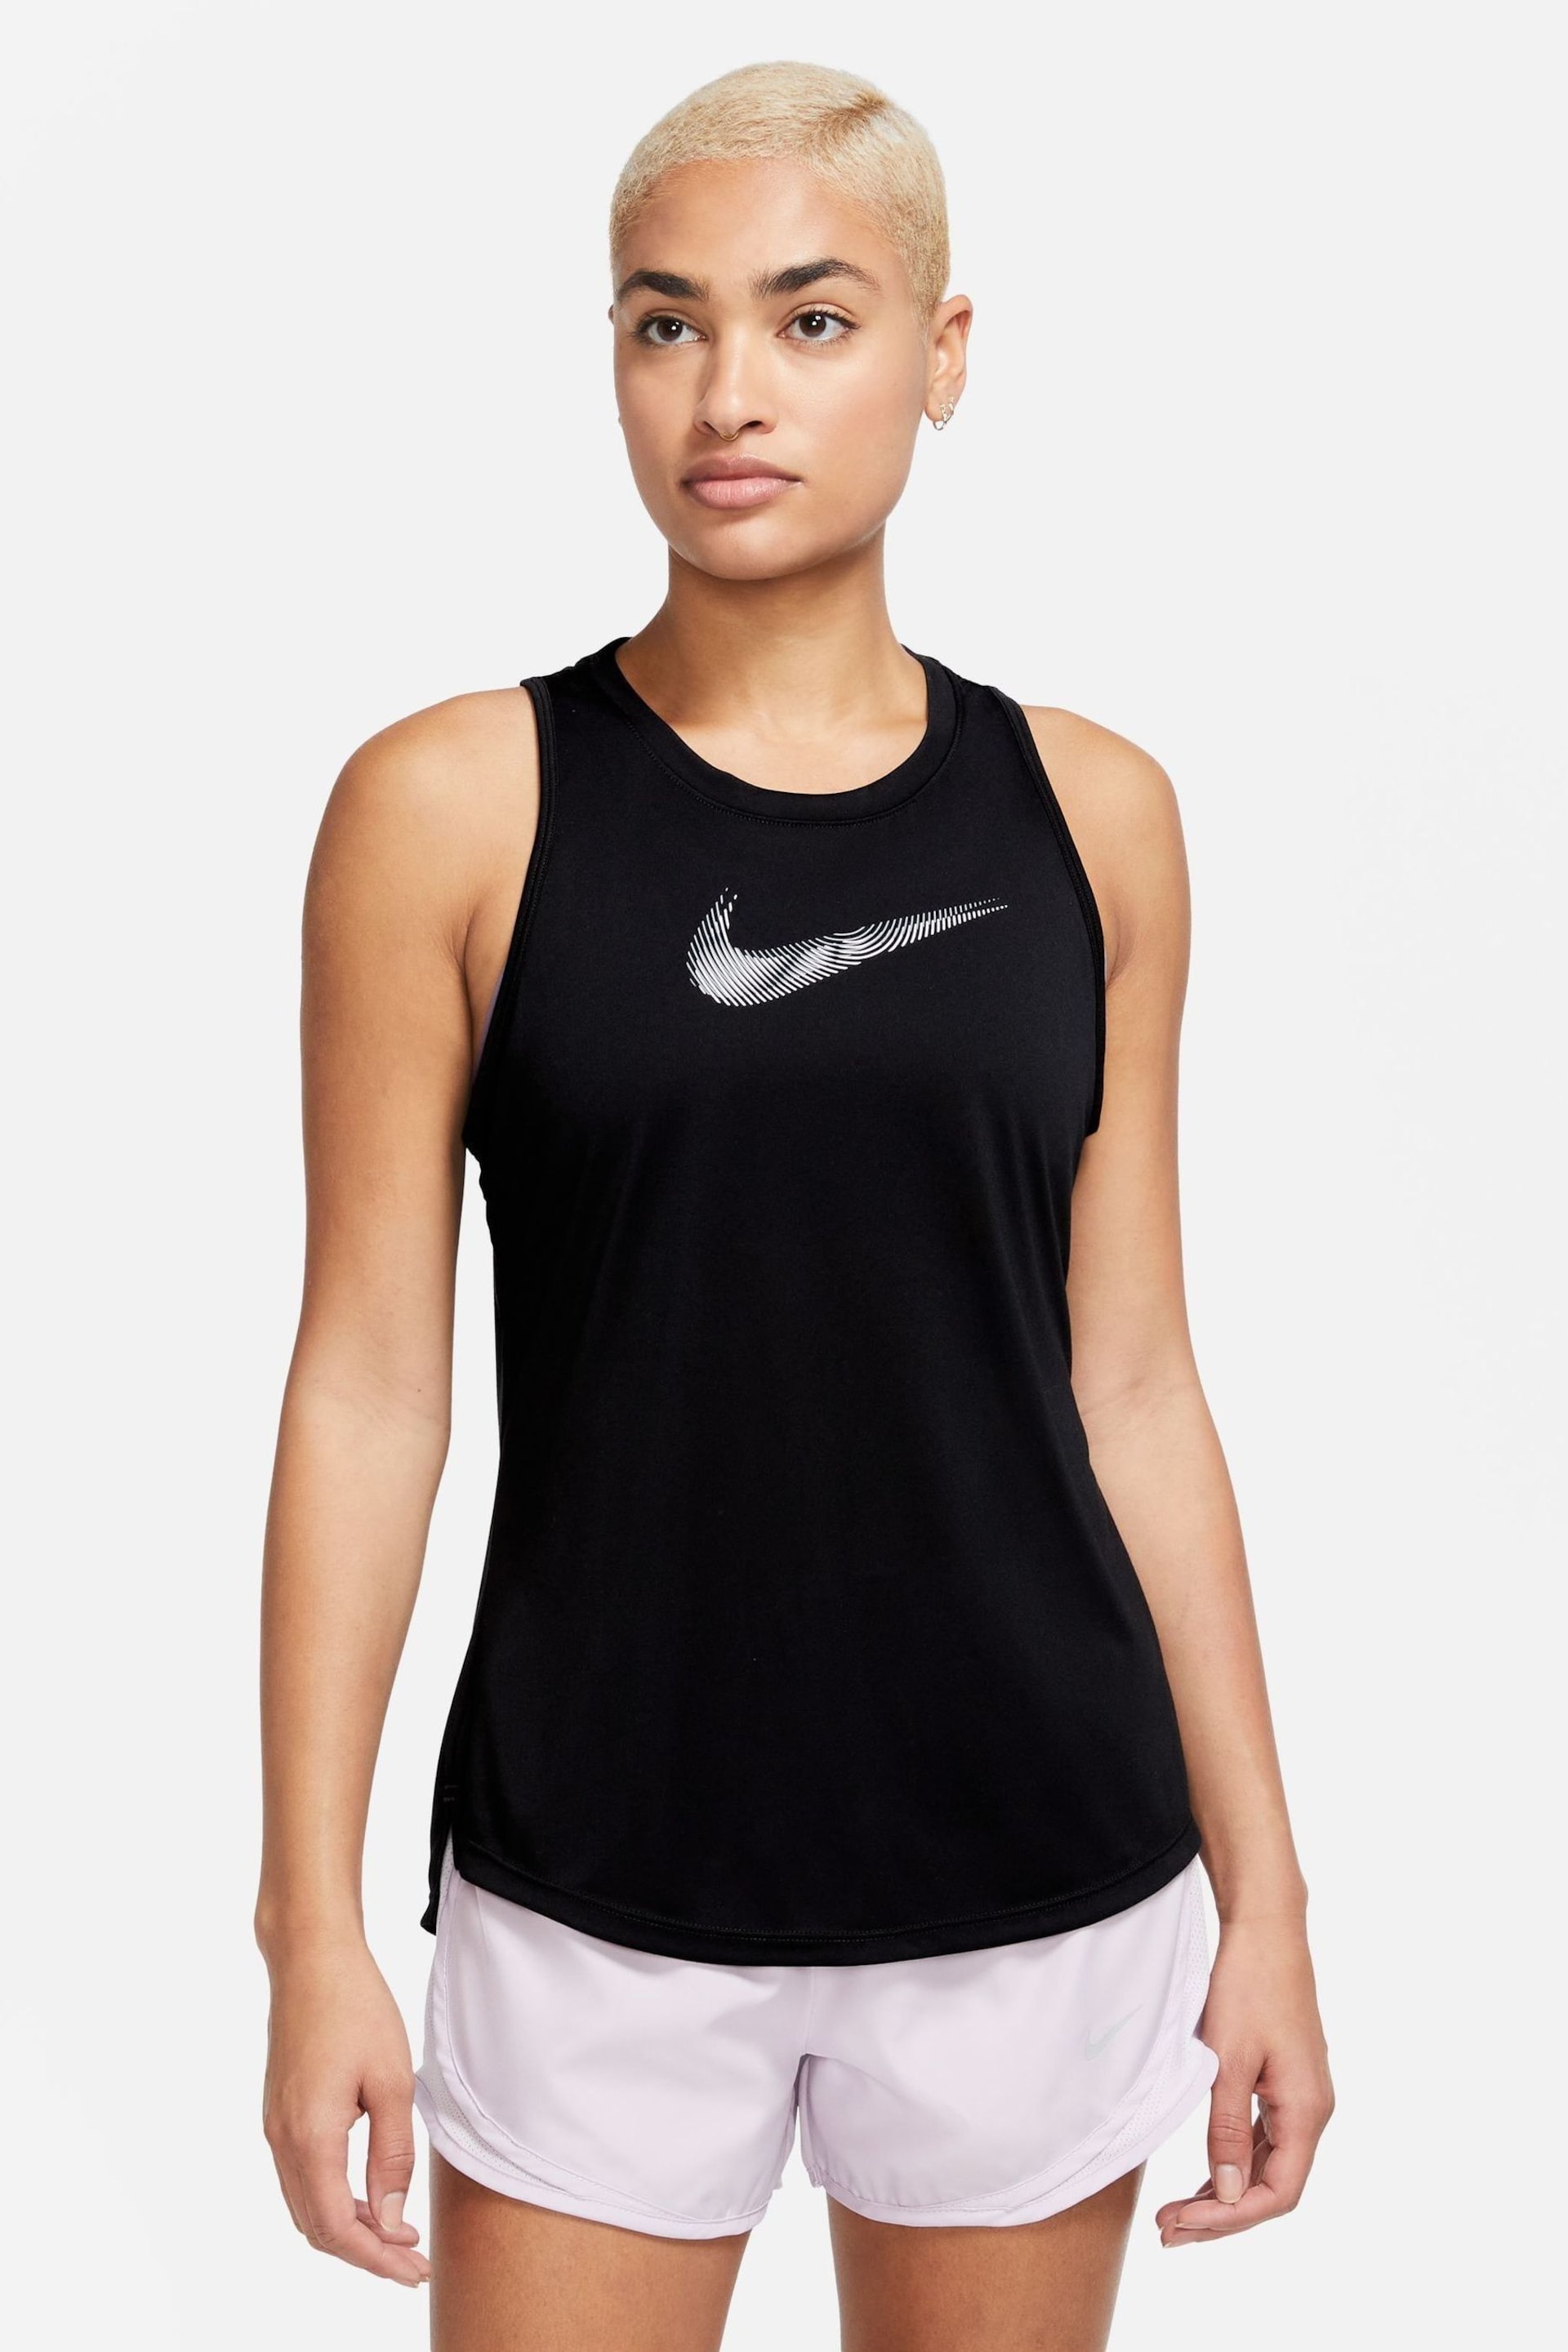 Nike Black Dri-FIT Swoosh Vest Running Top - Image 1 of 3